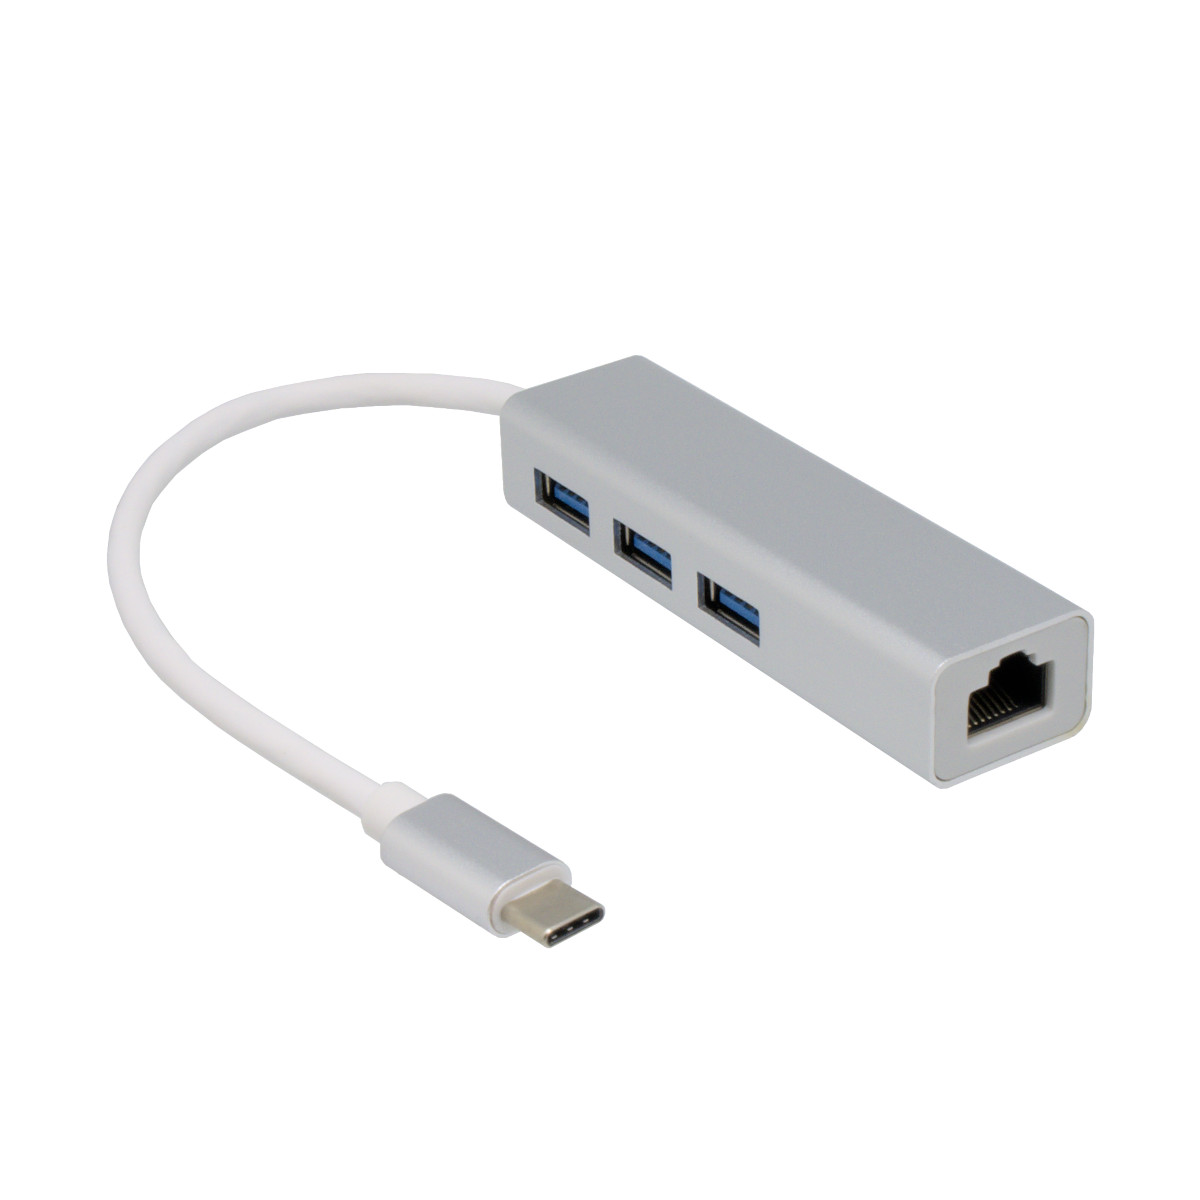 USB Type-C to 3 Port USB 3.0 + Ethernet Hub